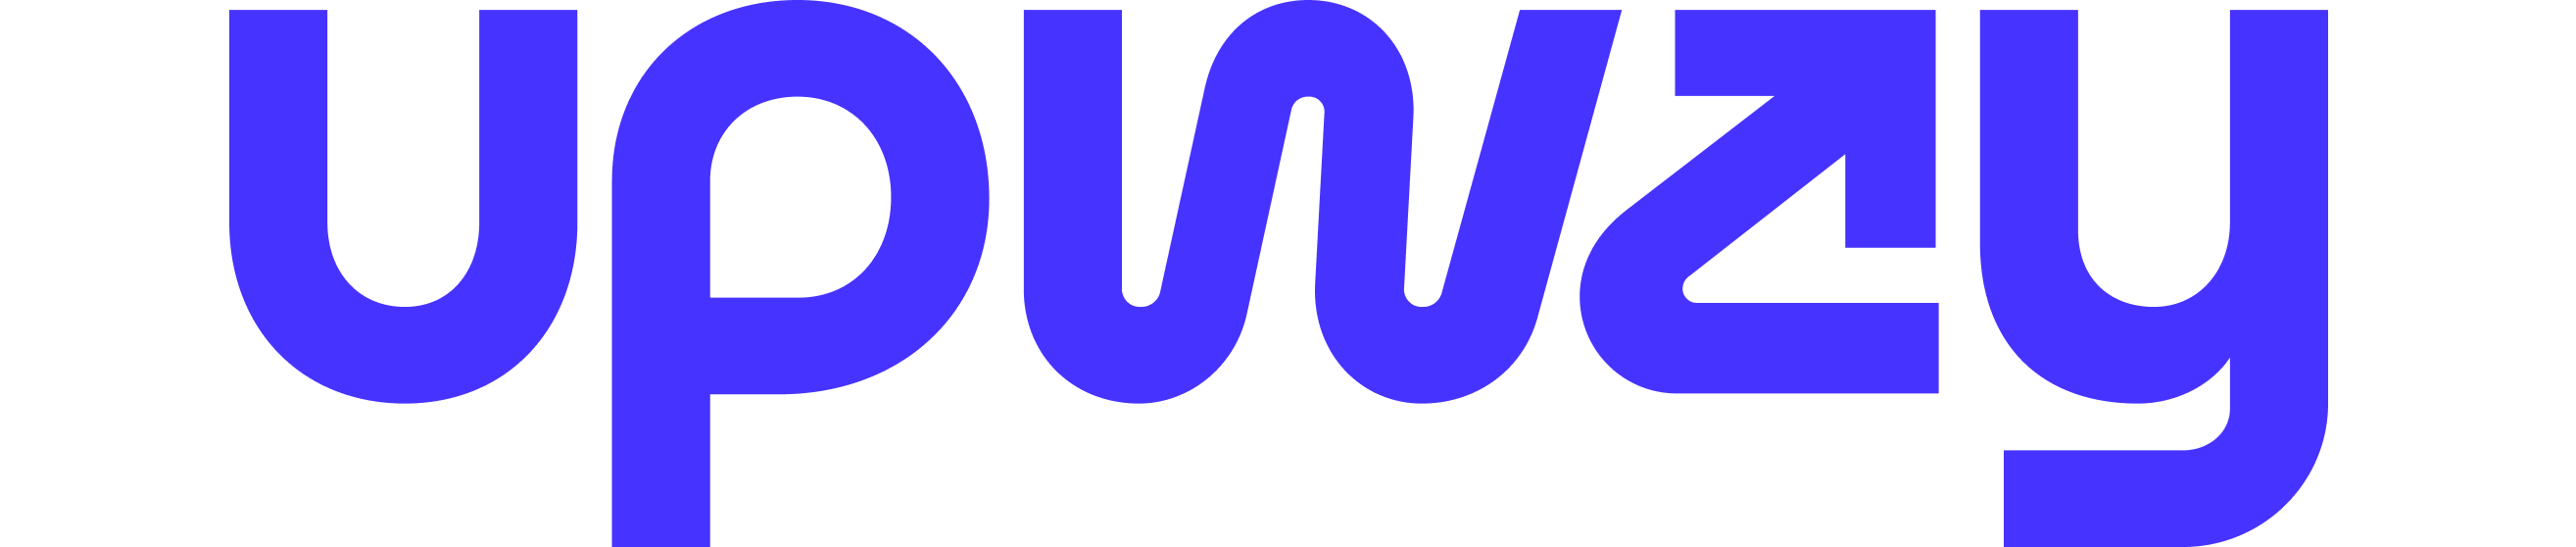 Upway Hilfe logo